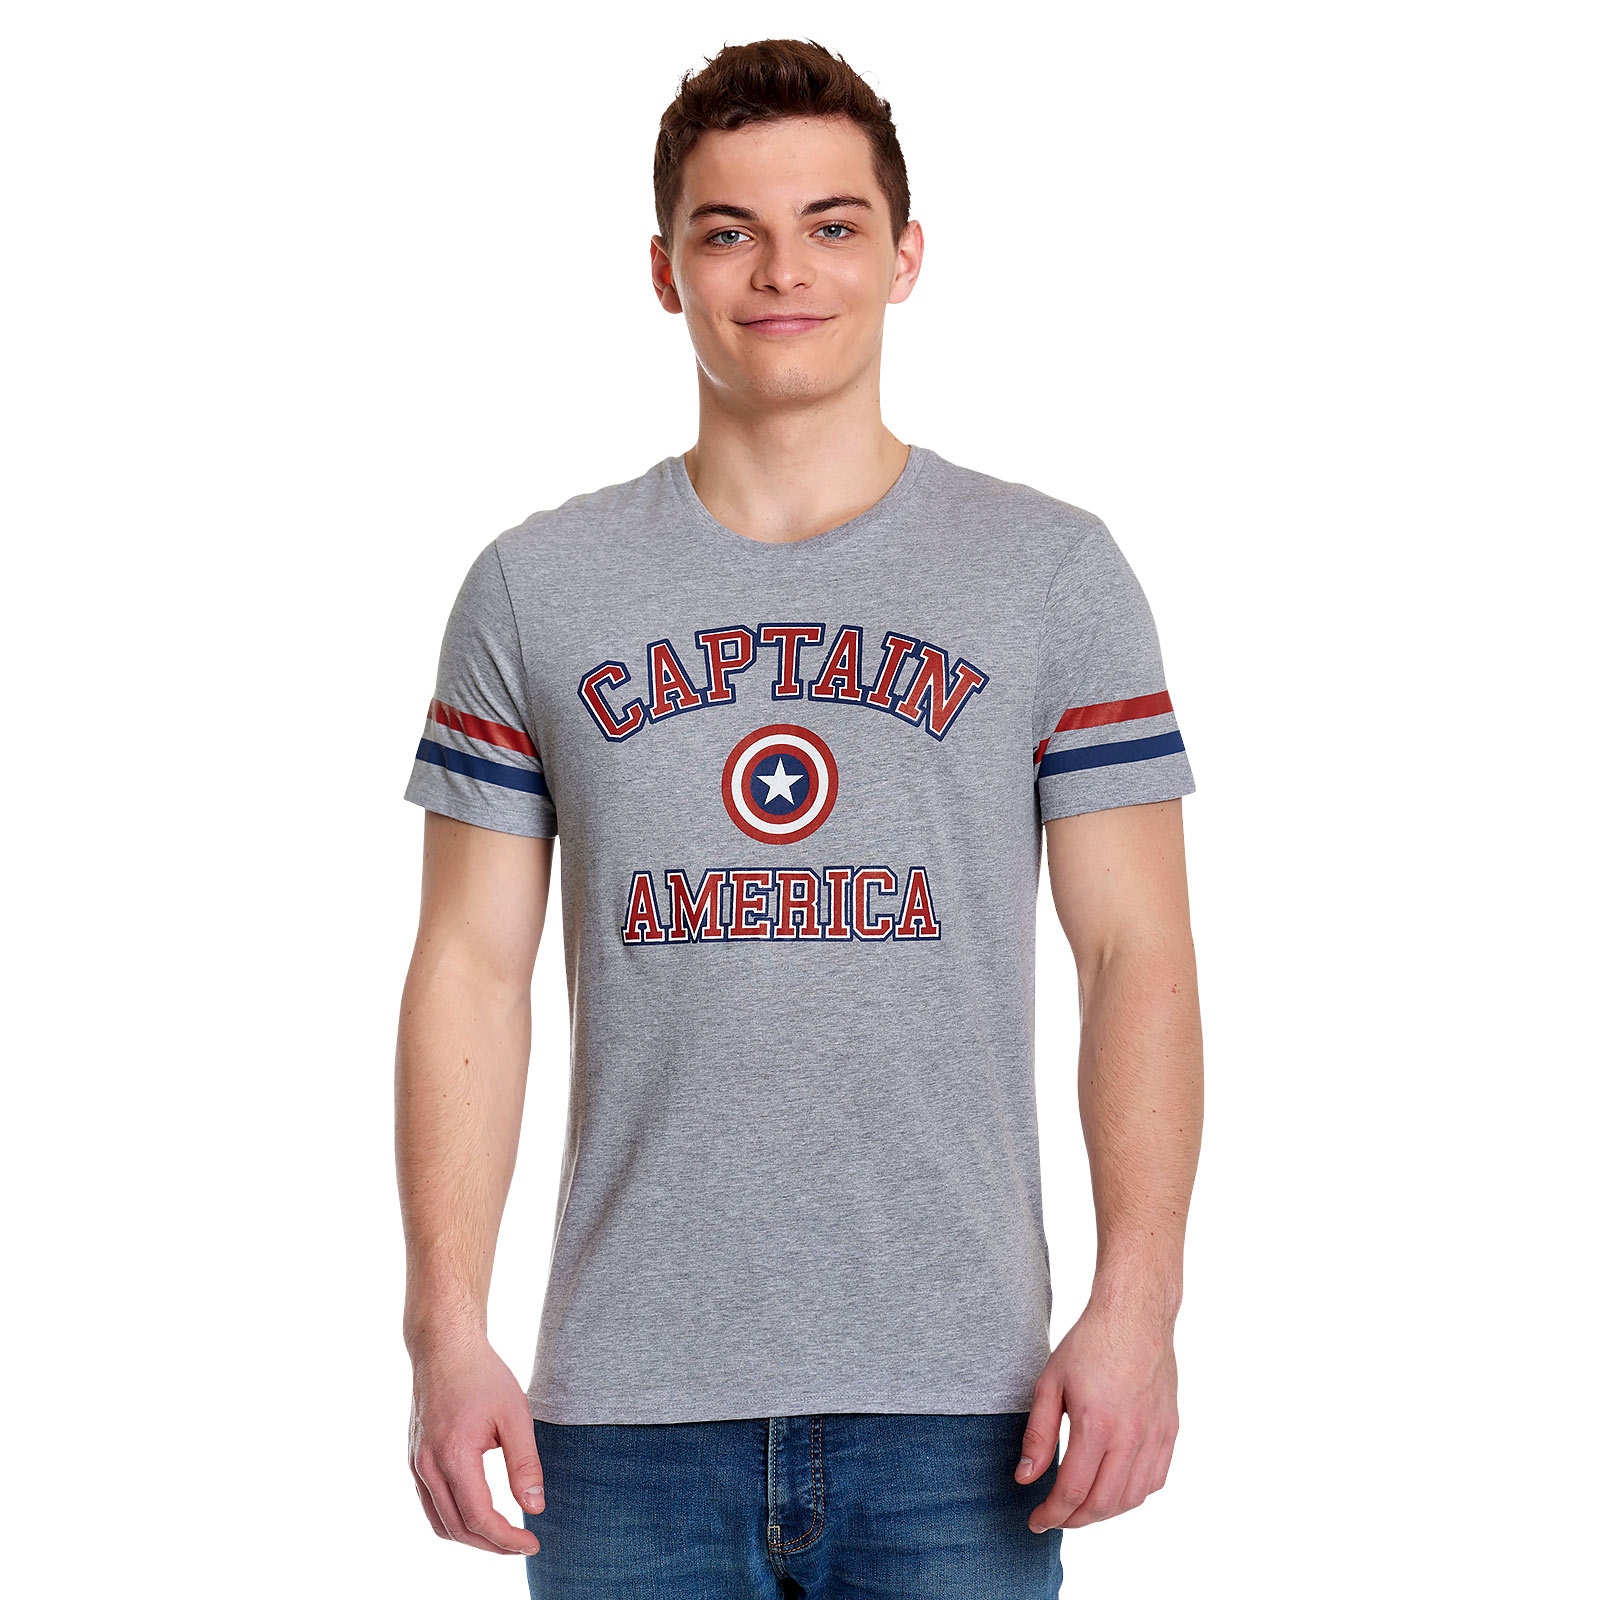 Captain America - College T-Shirt grau